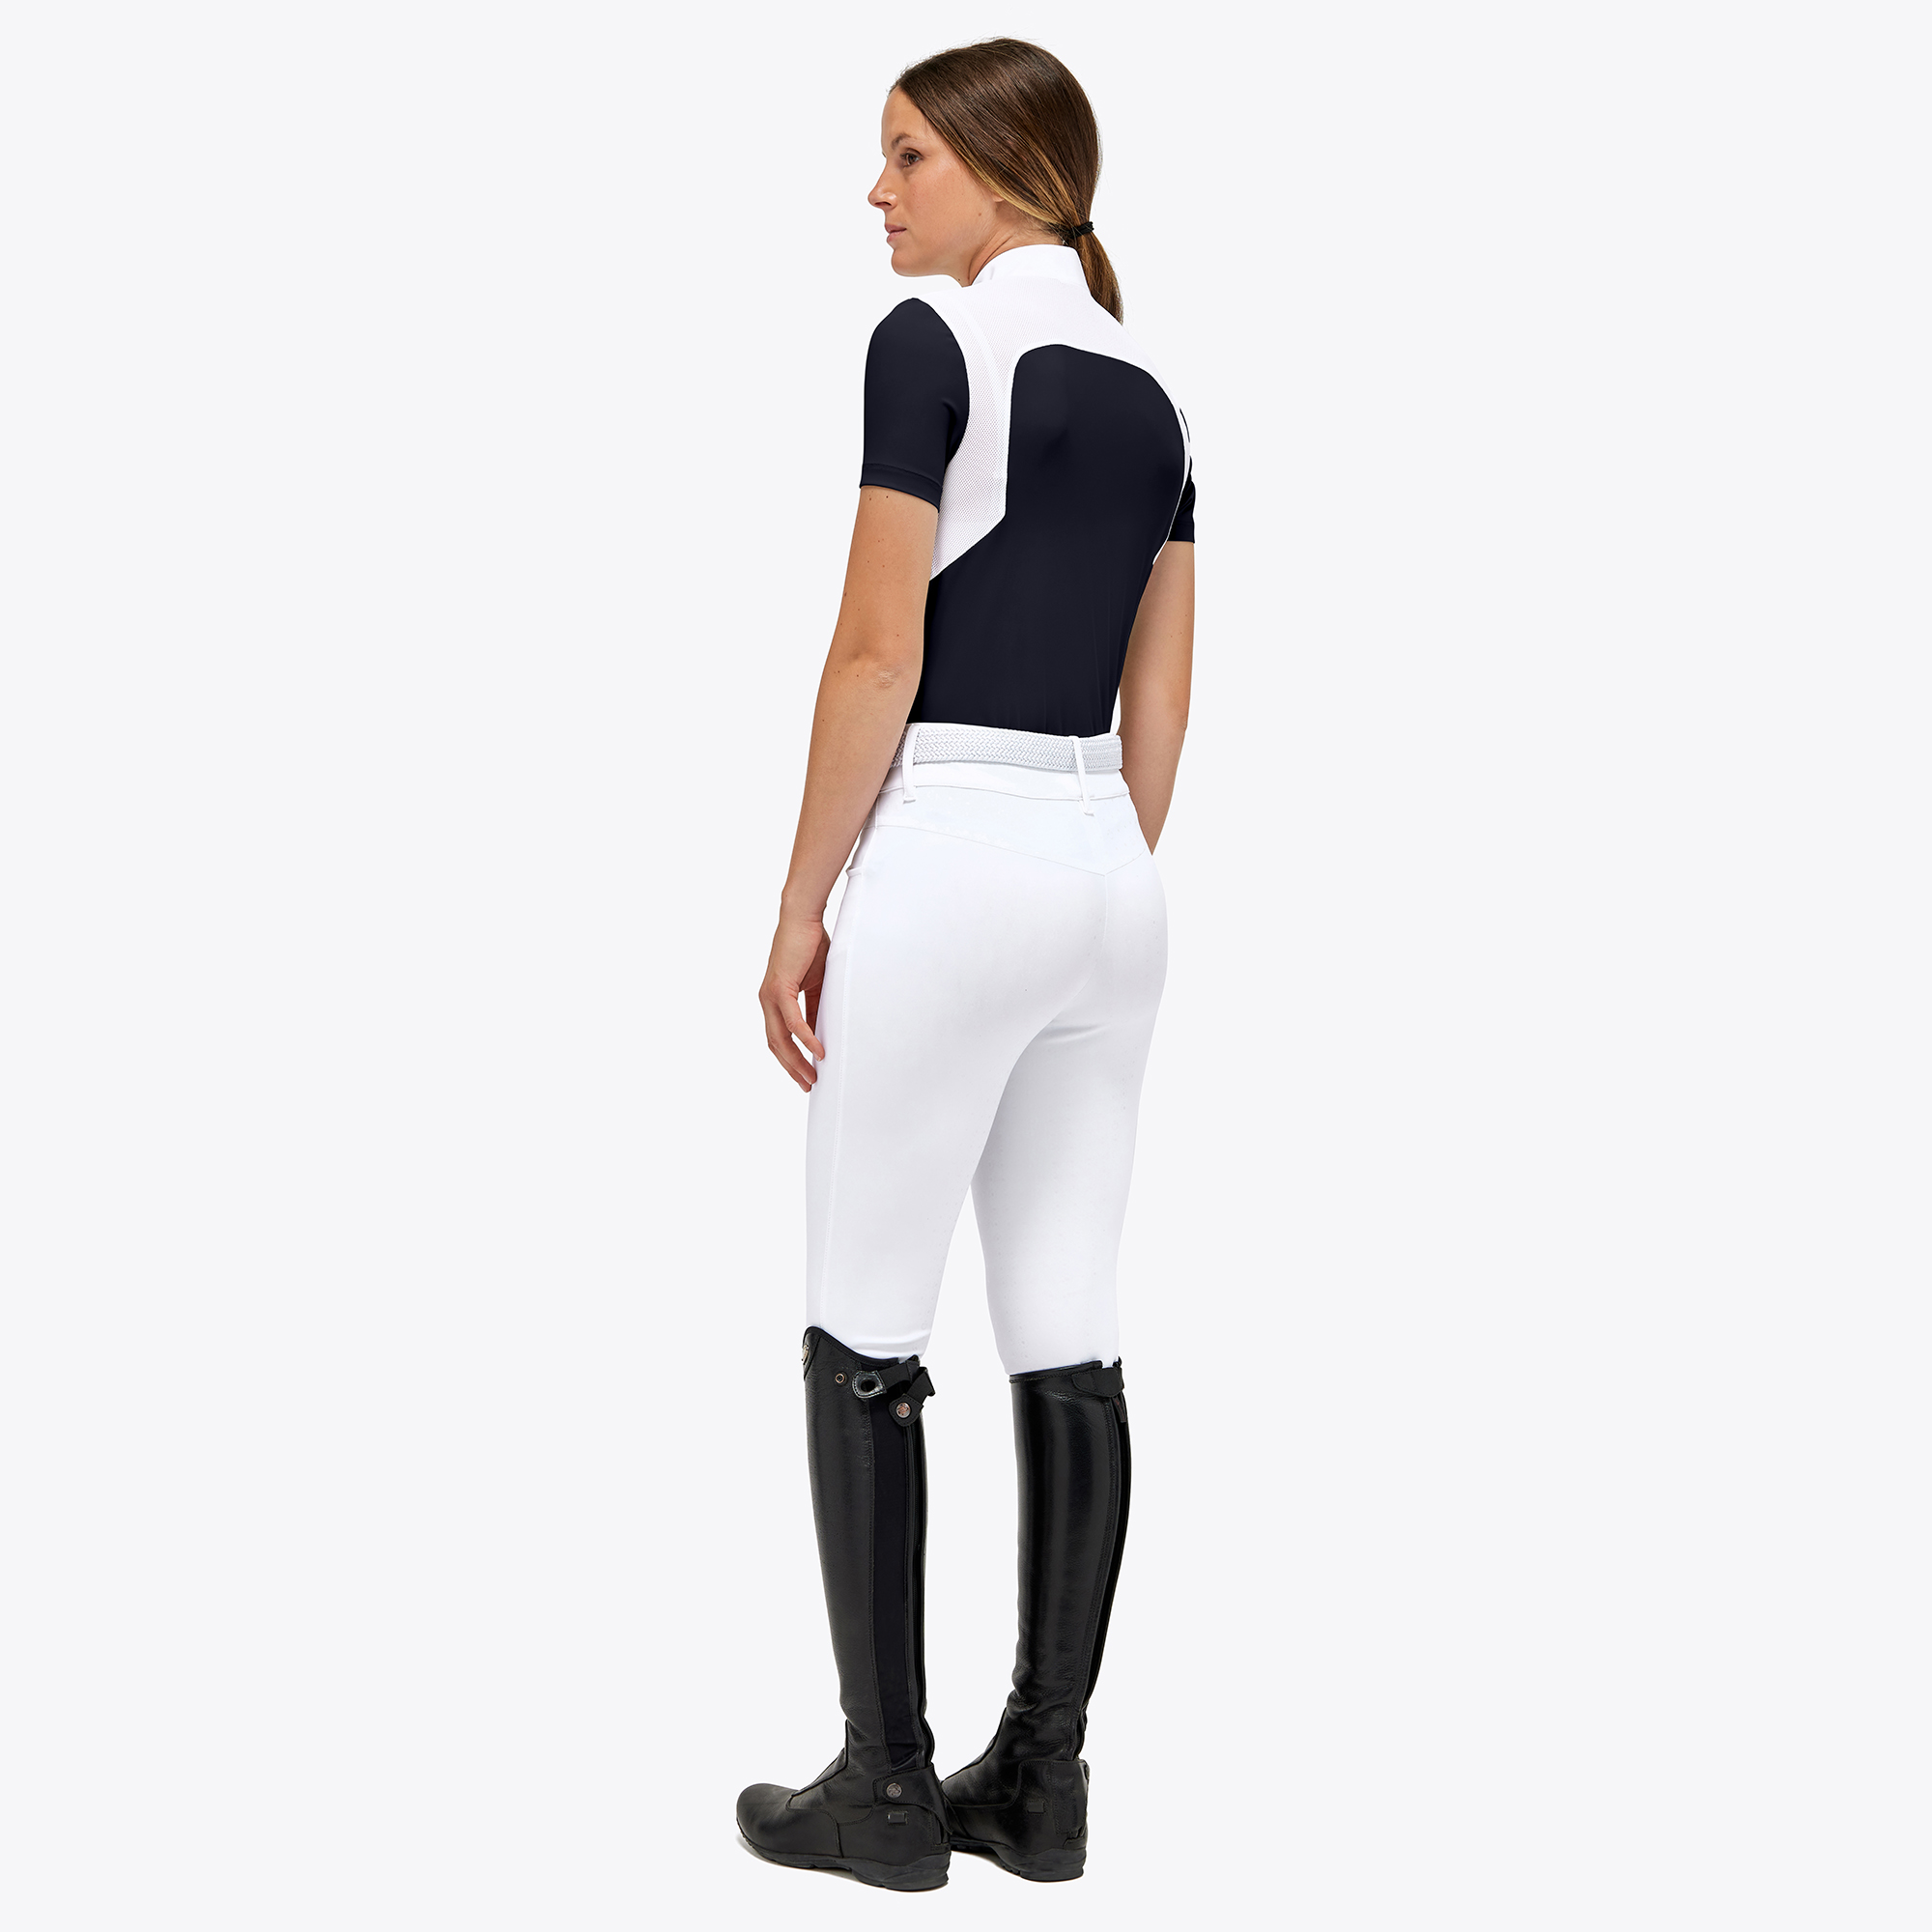 CAVALLERIA TOSCANA elegantes Damen Kurzarm Turniershirt Jersey Mesh - white/knit - M - 5